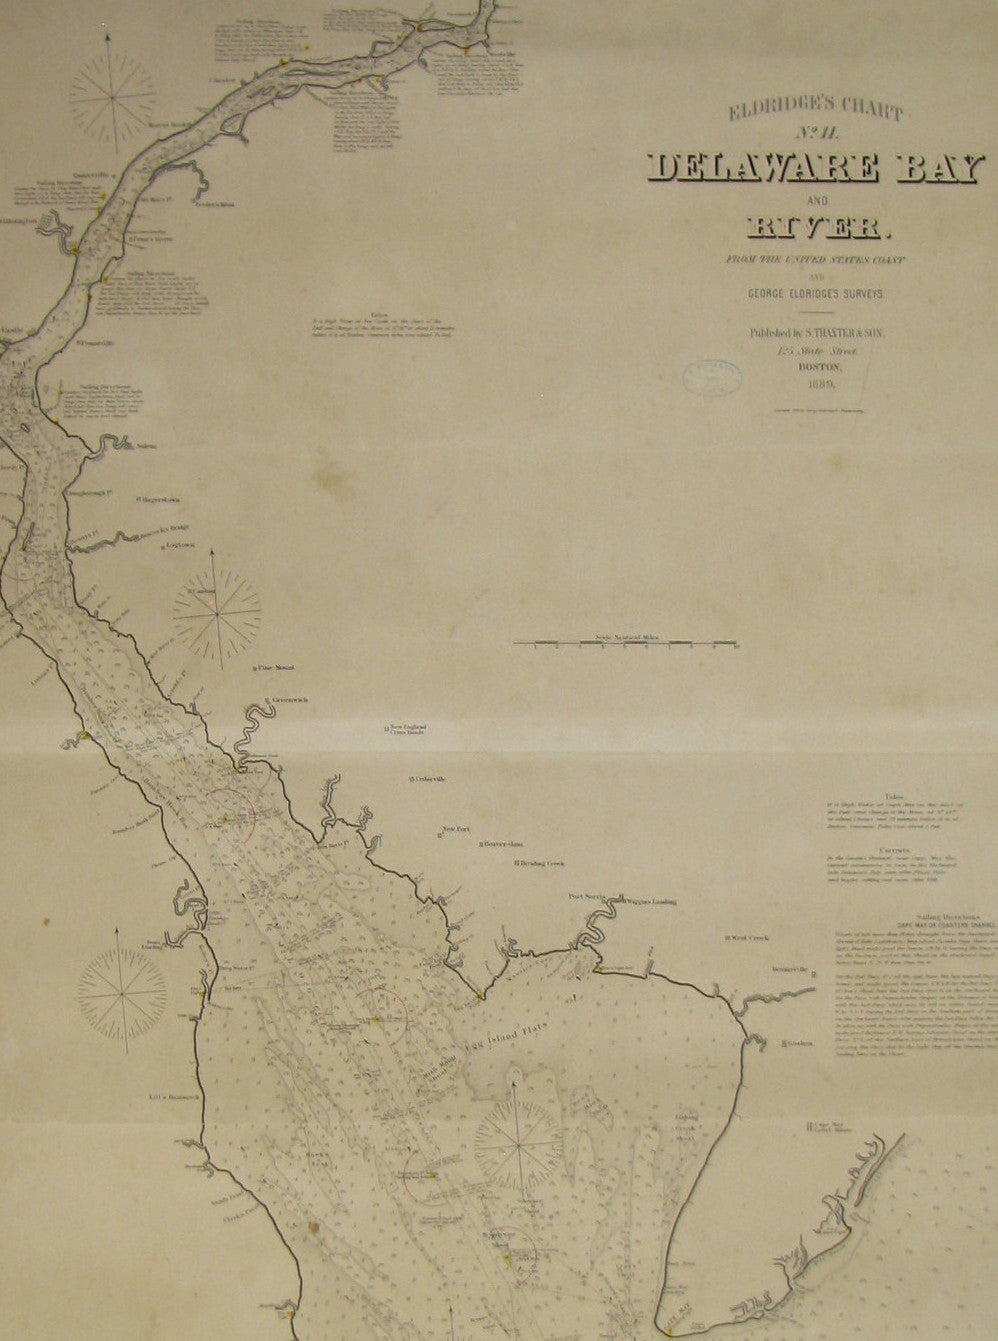 1889 Sea Chart Map of Delaware Bay by George Eldridge, Chart No. 11 - The Great Republic